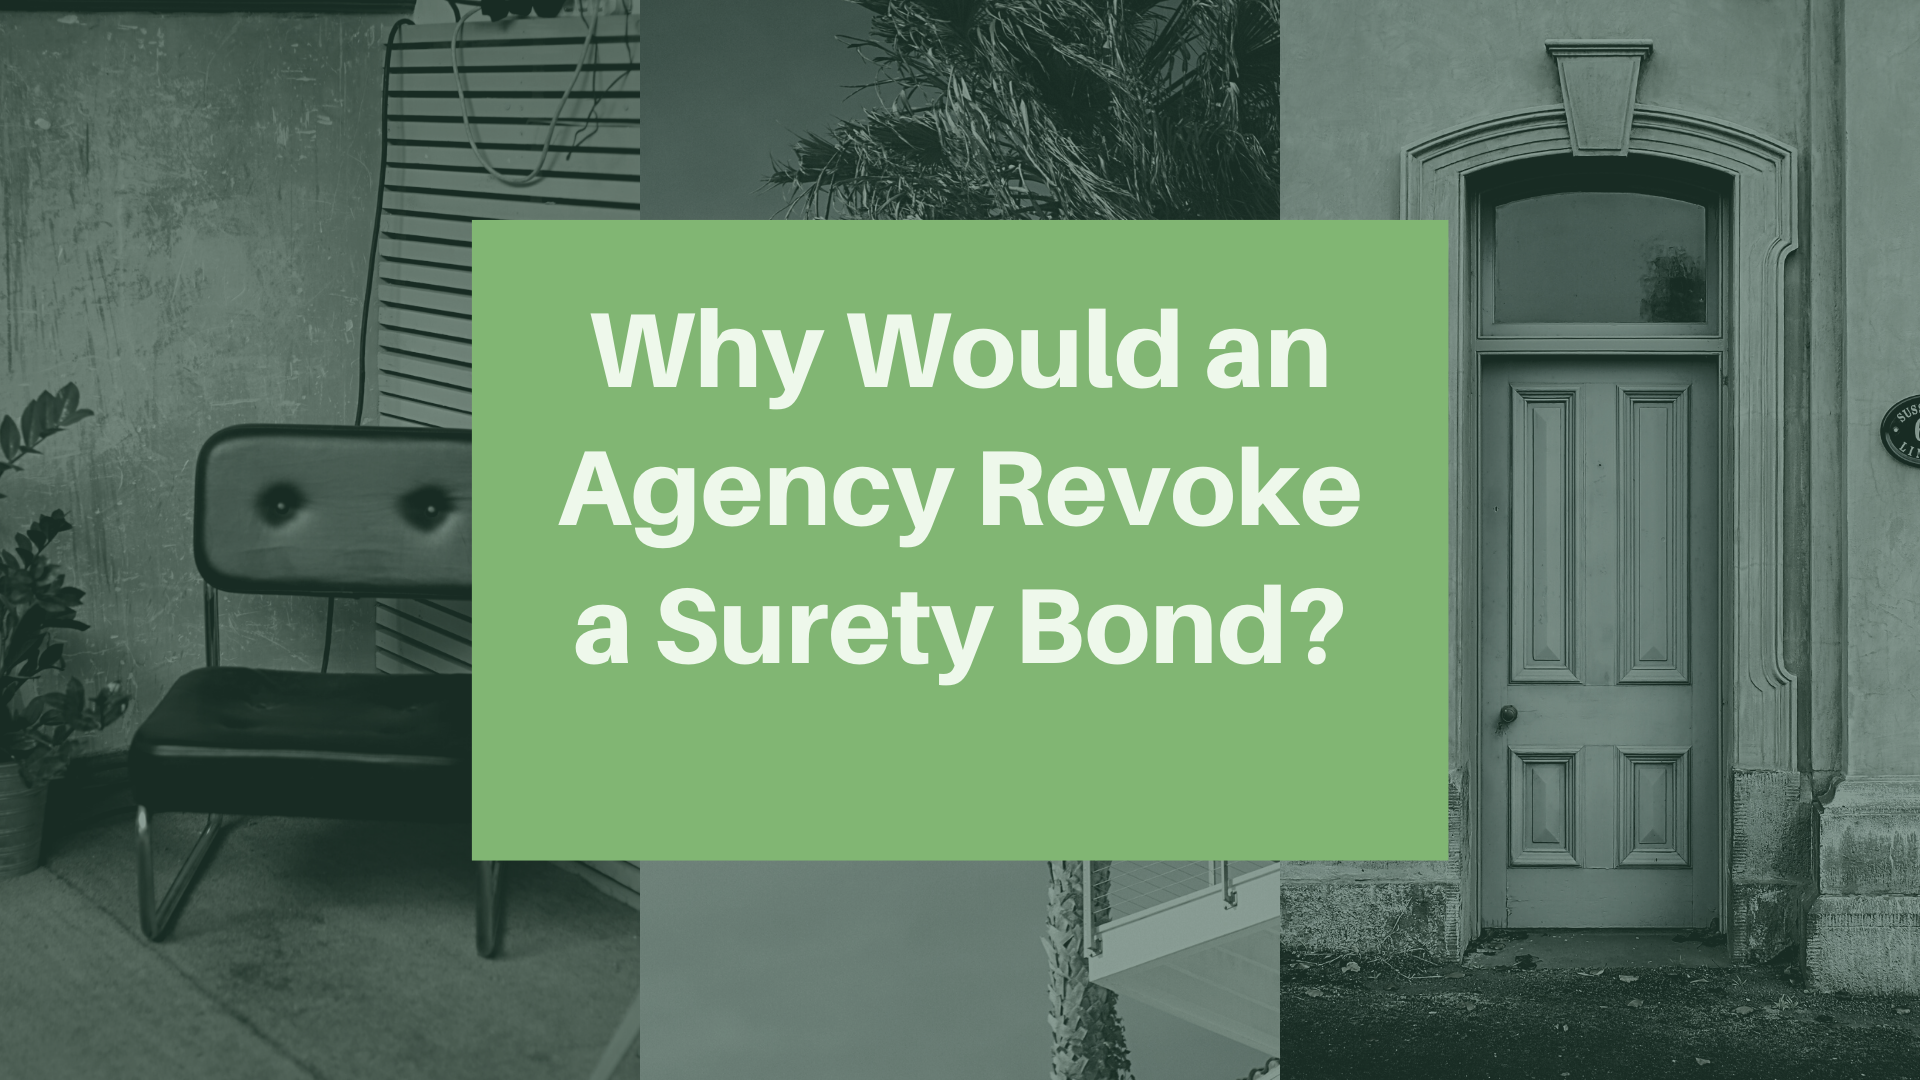 surety bond - Why do agencies revoke surety bonds - building with green text box